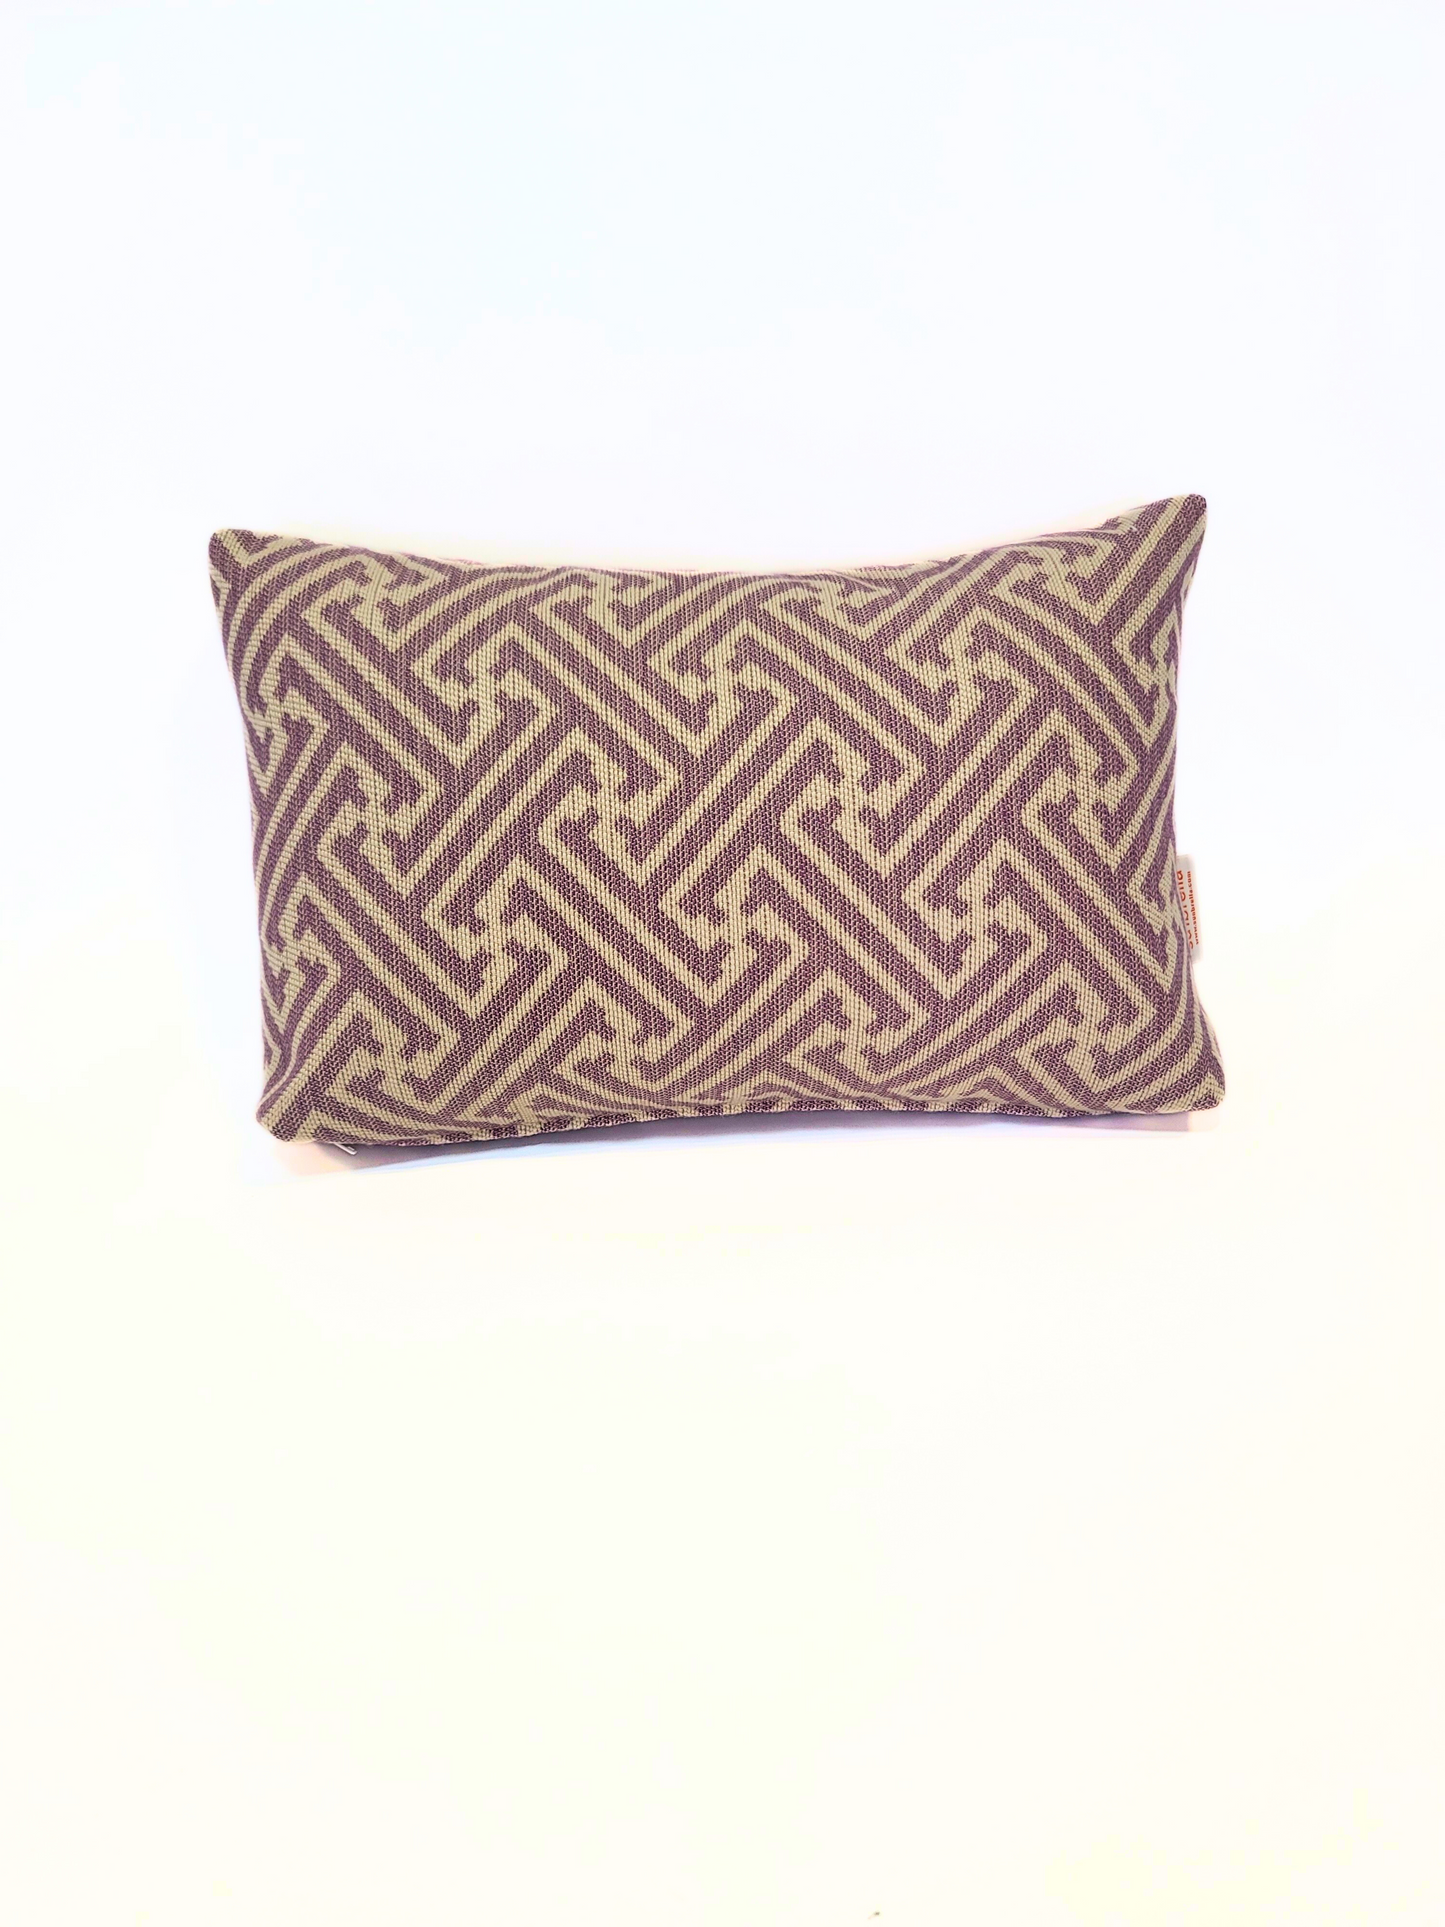 Premium Sunbrella "Meander Lilac" Indoor/Outdoor Toss Pillow Cover